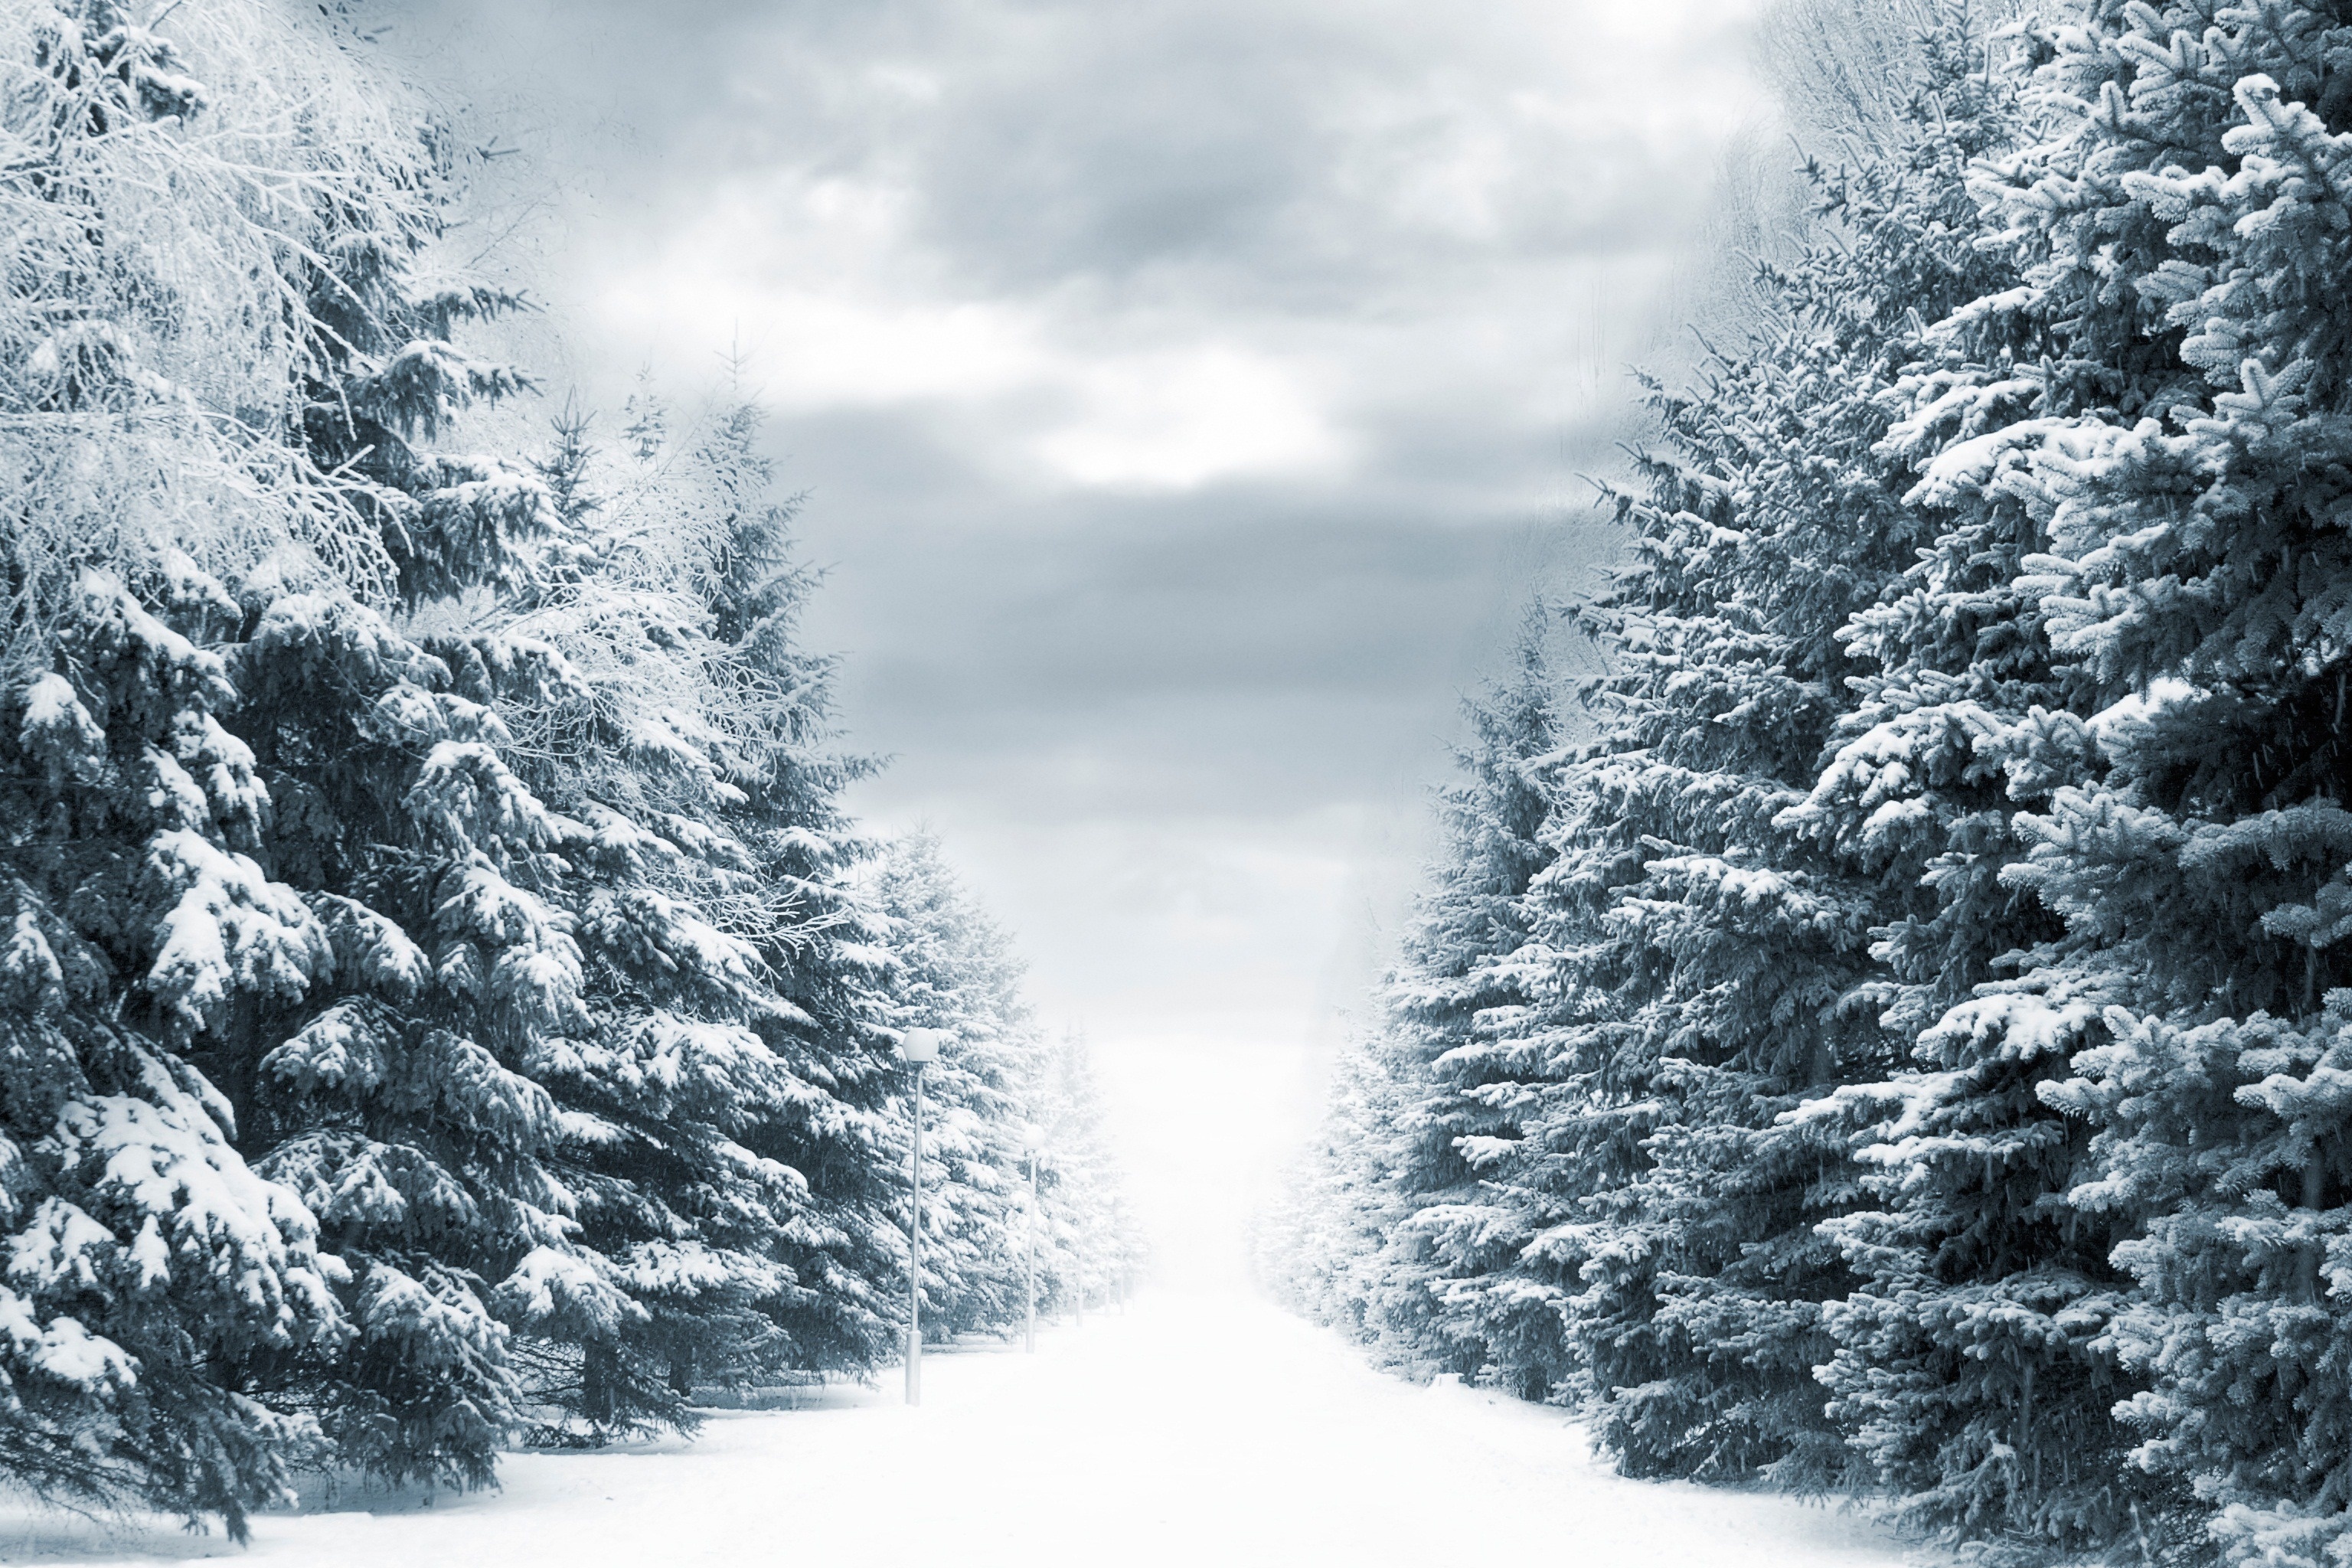 Winter wonderland, Snow-covered forest, Serene spruce trees, Cozy atmosphere, 3080x2050 HD Desktop